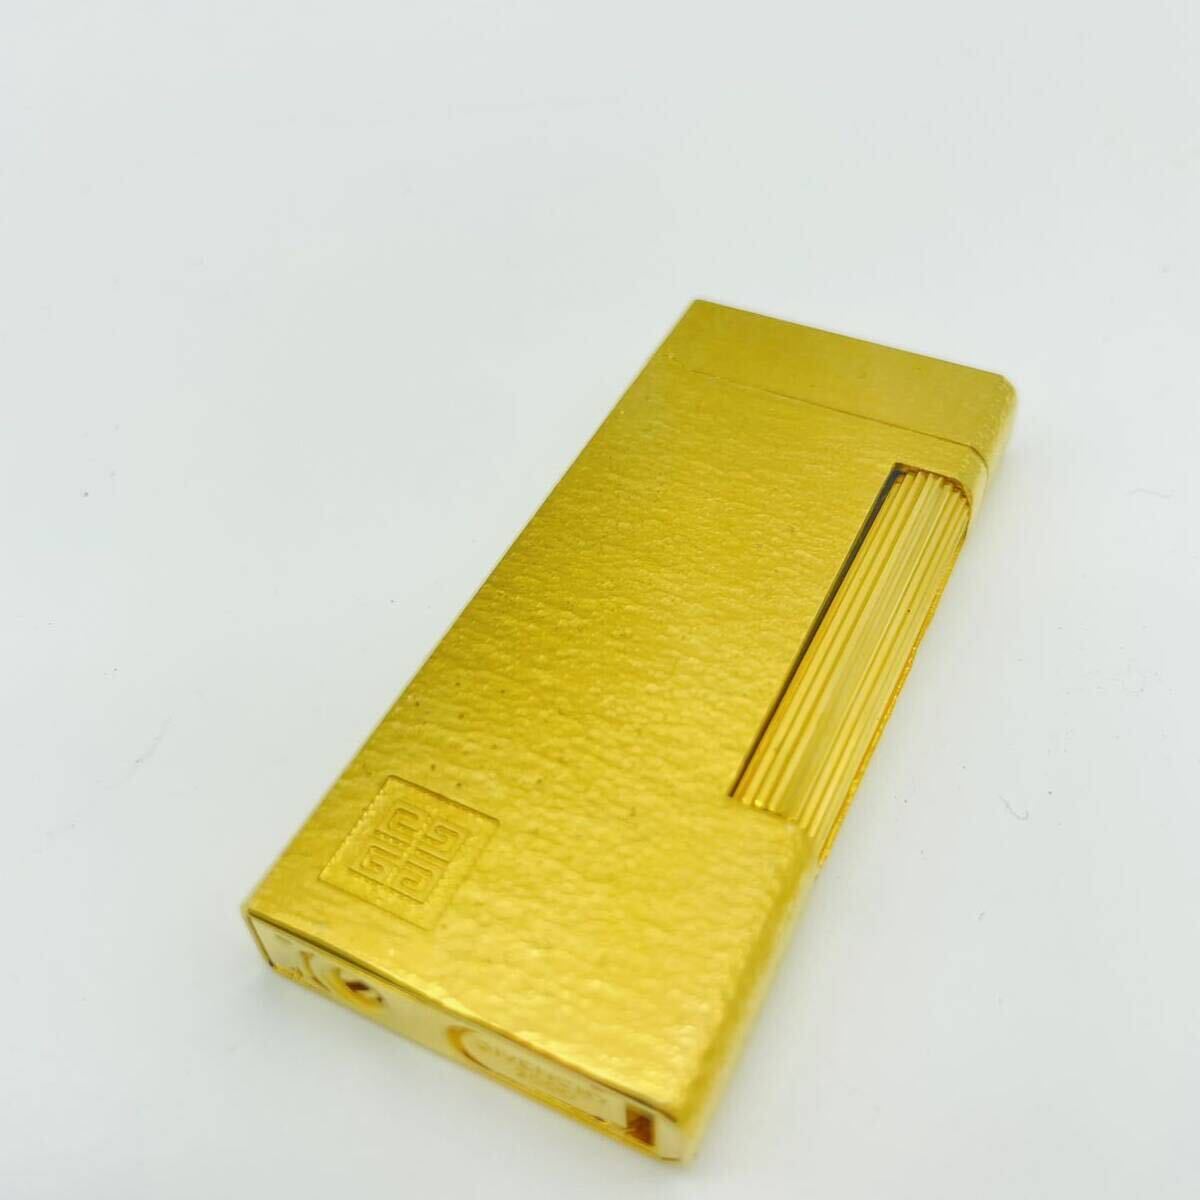 [1 иен старт ]GIVENCHY/ Givenchy 2000 газовая зажигалка Gold цвет MG120